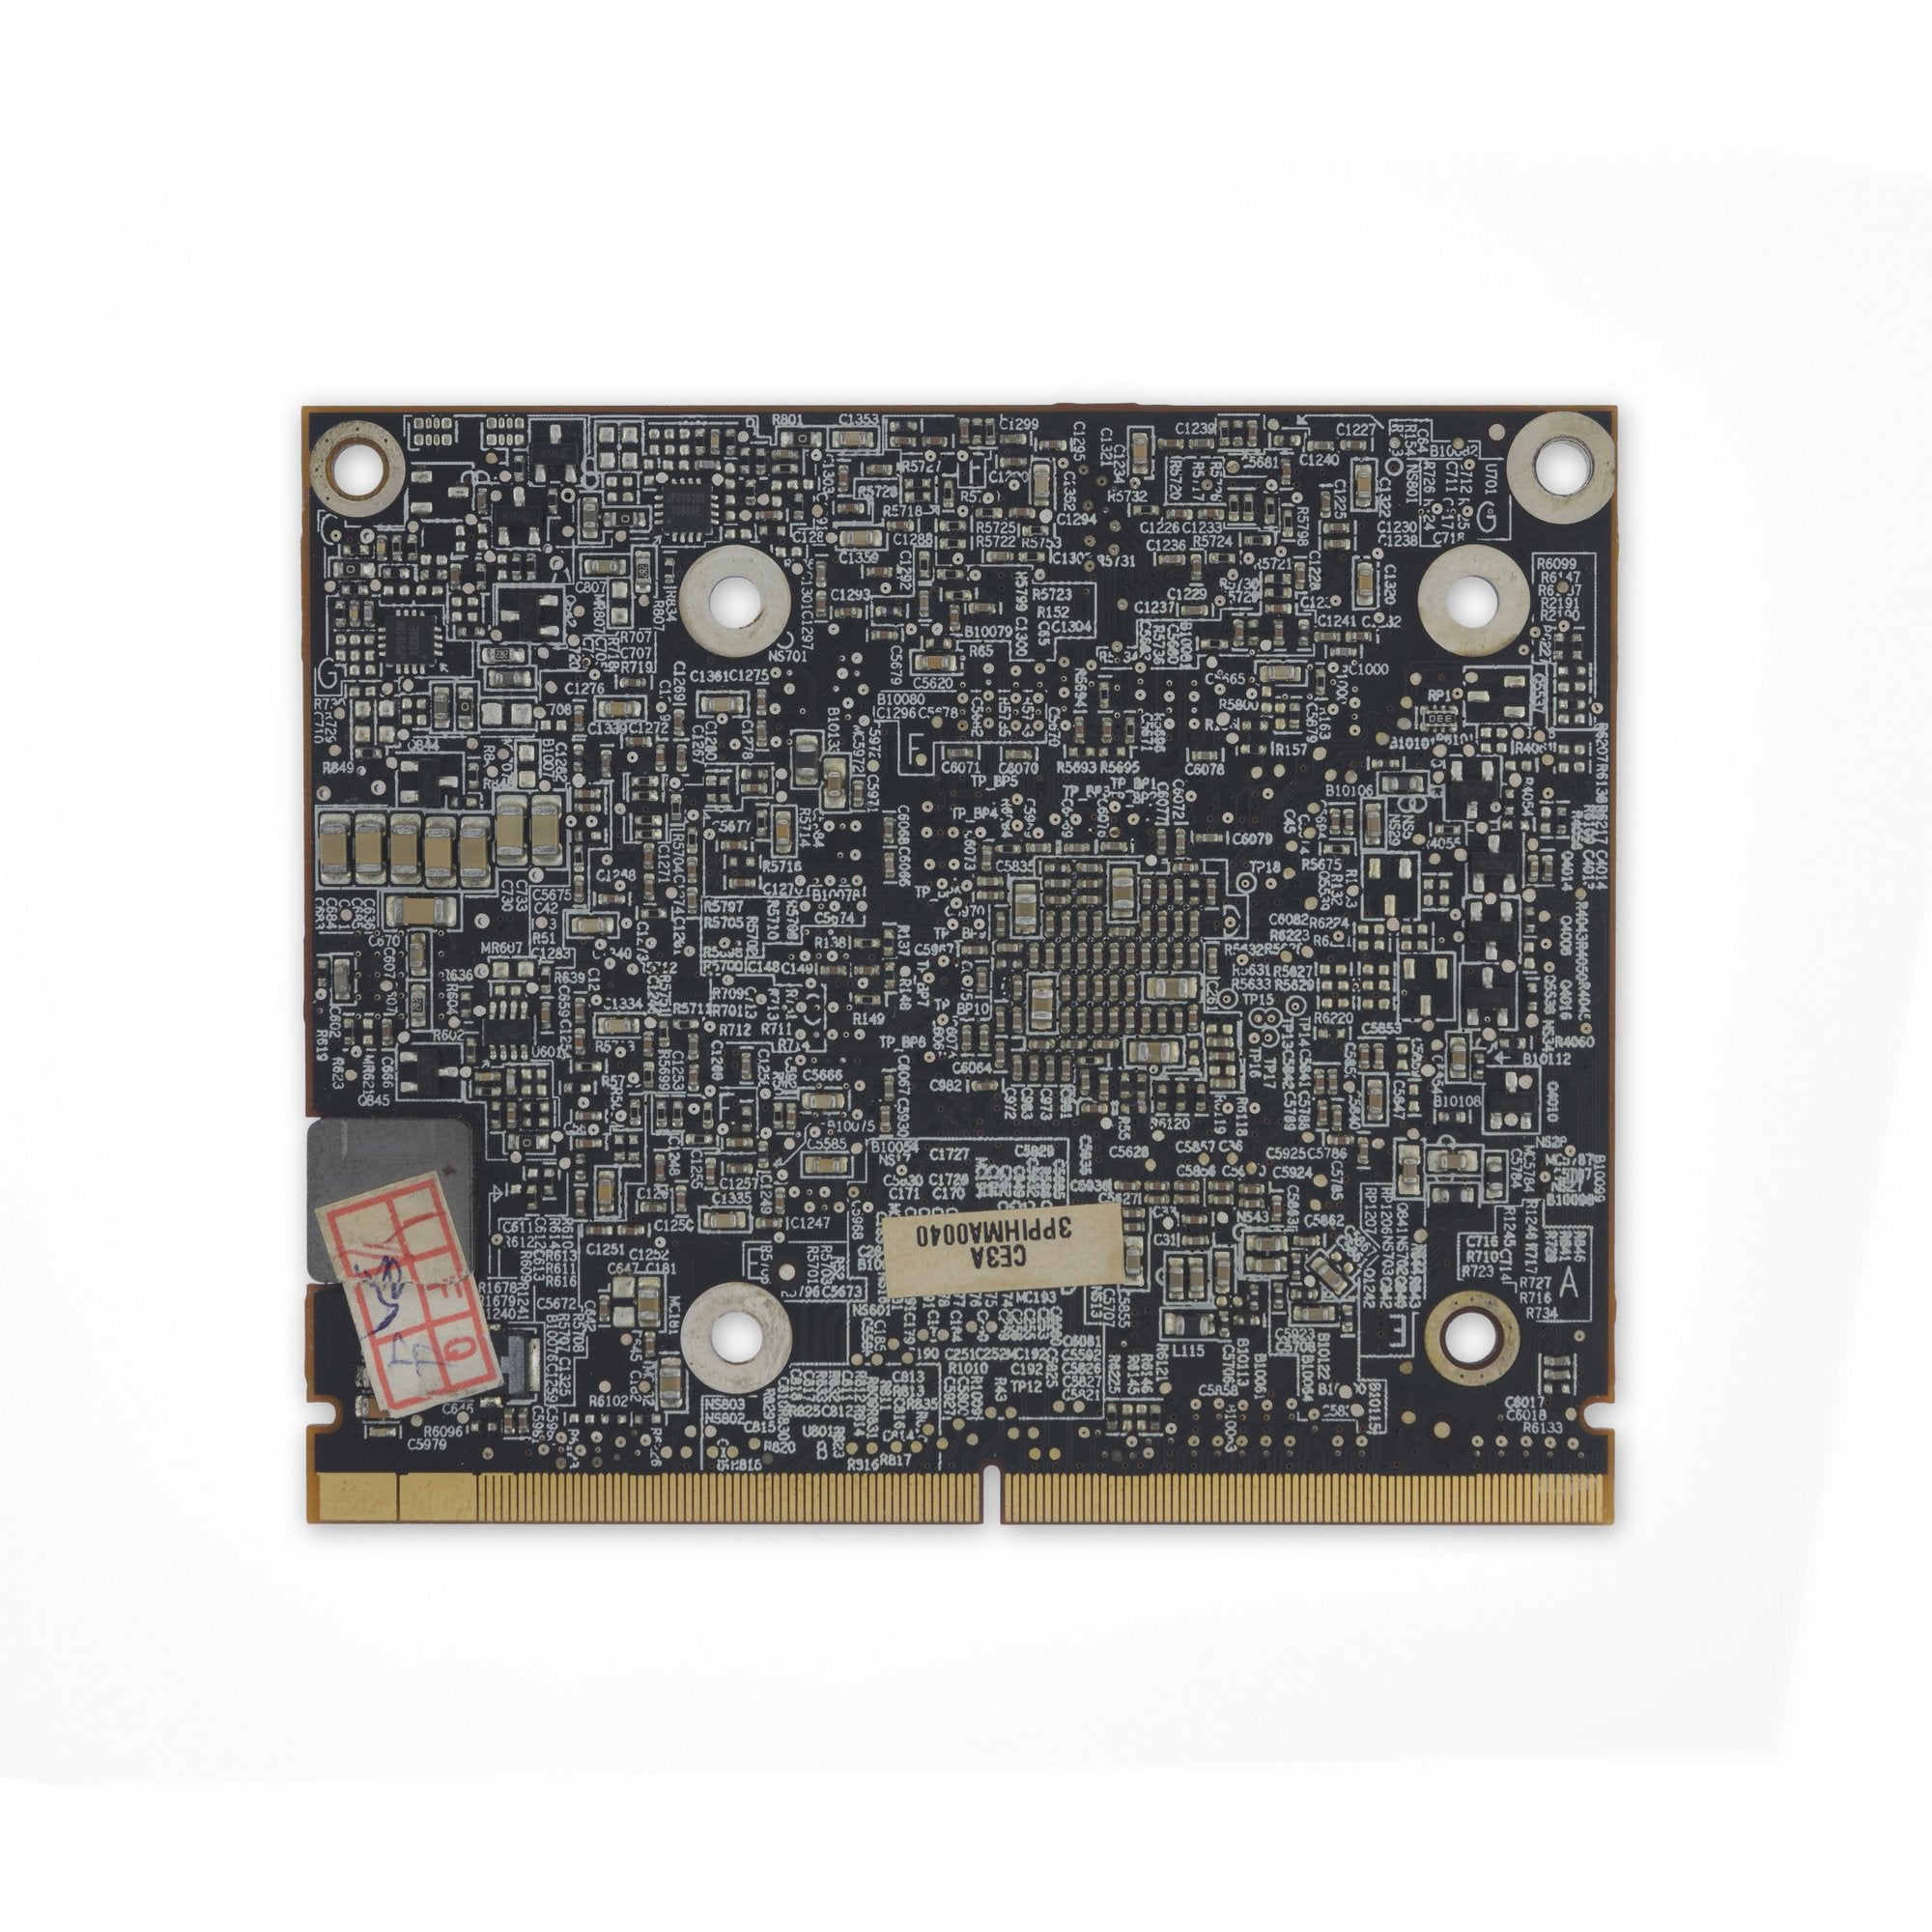 iMac Intel 21.5" EMC 2389 Radeon HD 4670 Graphics Card Used